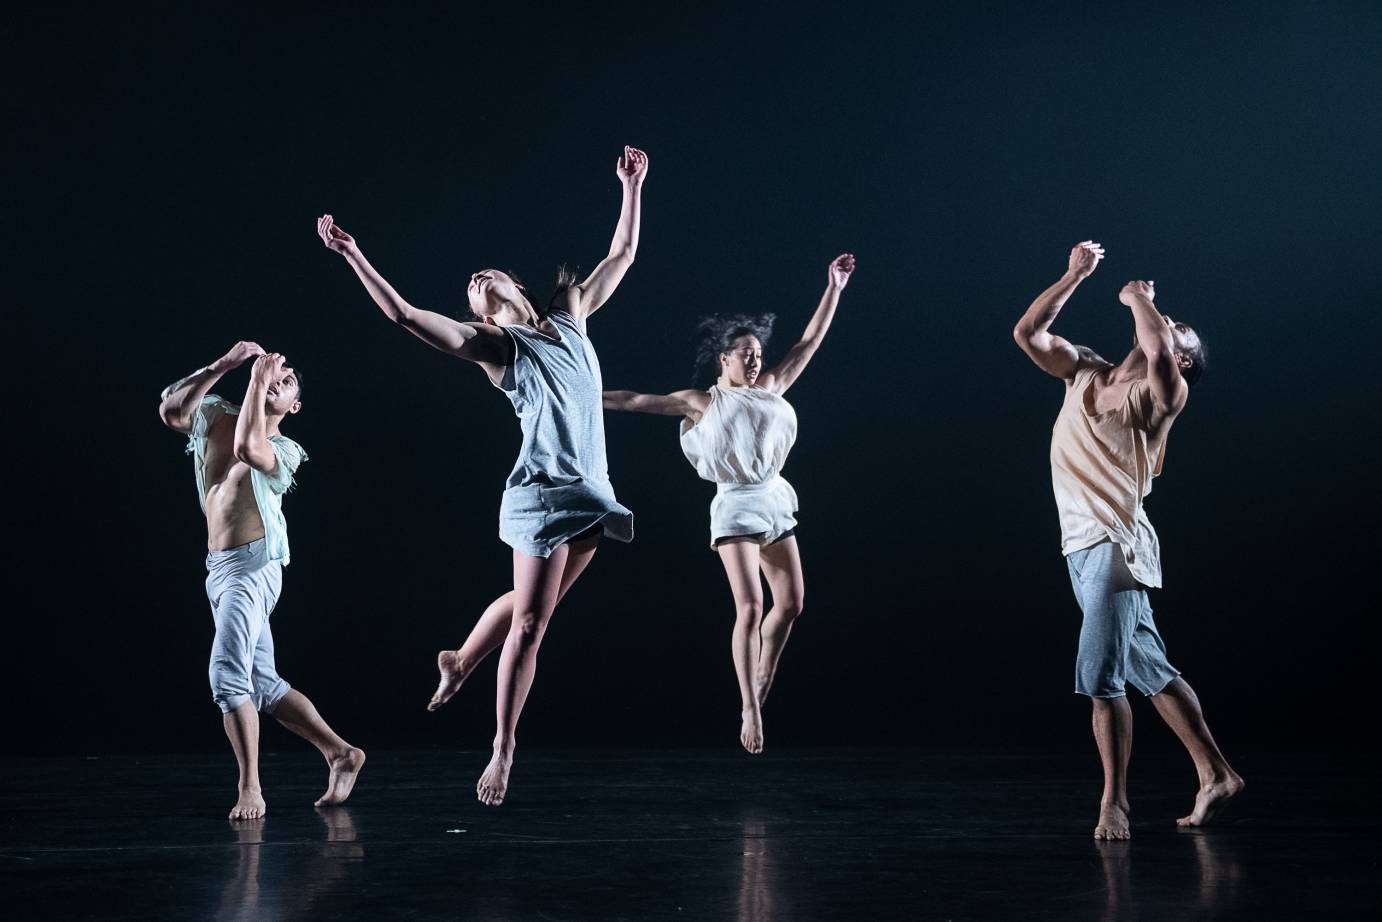 Dancers jump and gesture exuberantly